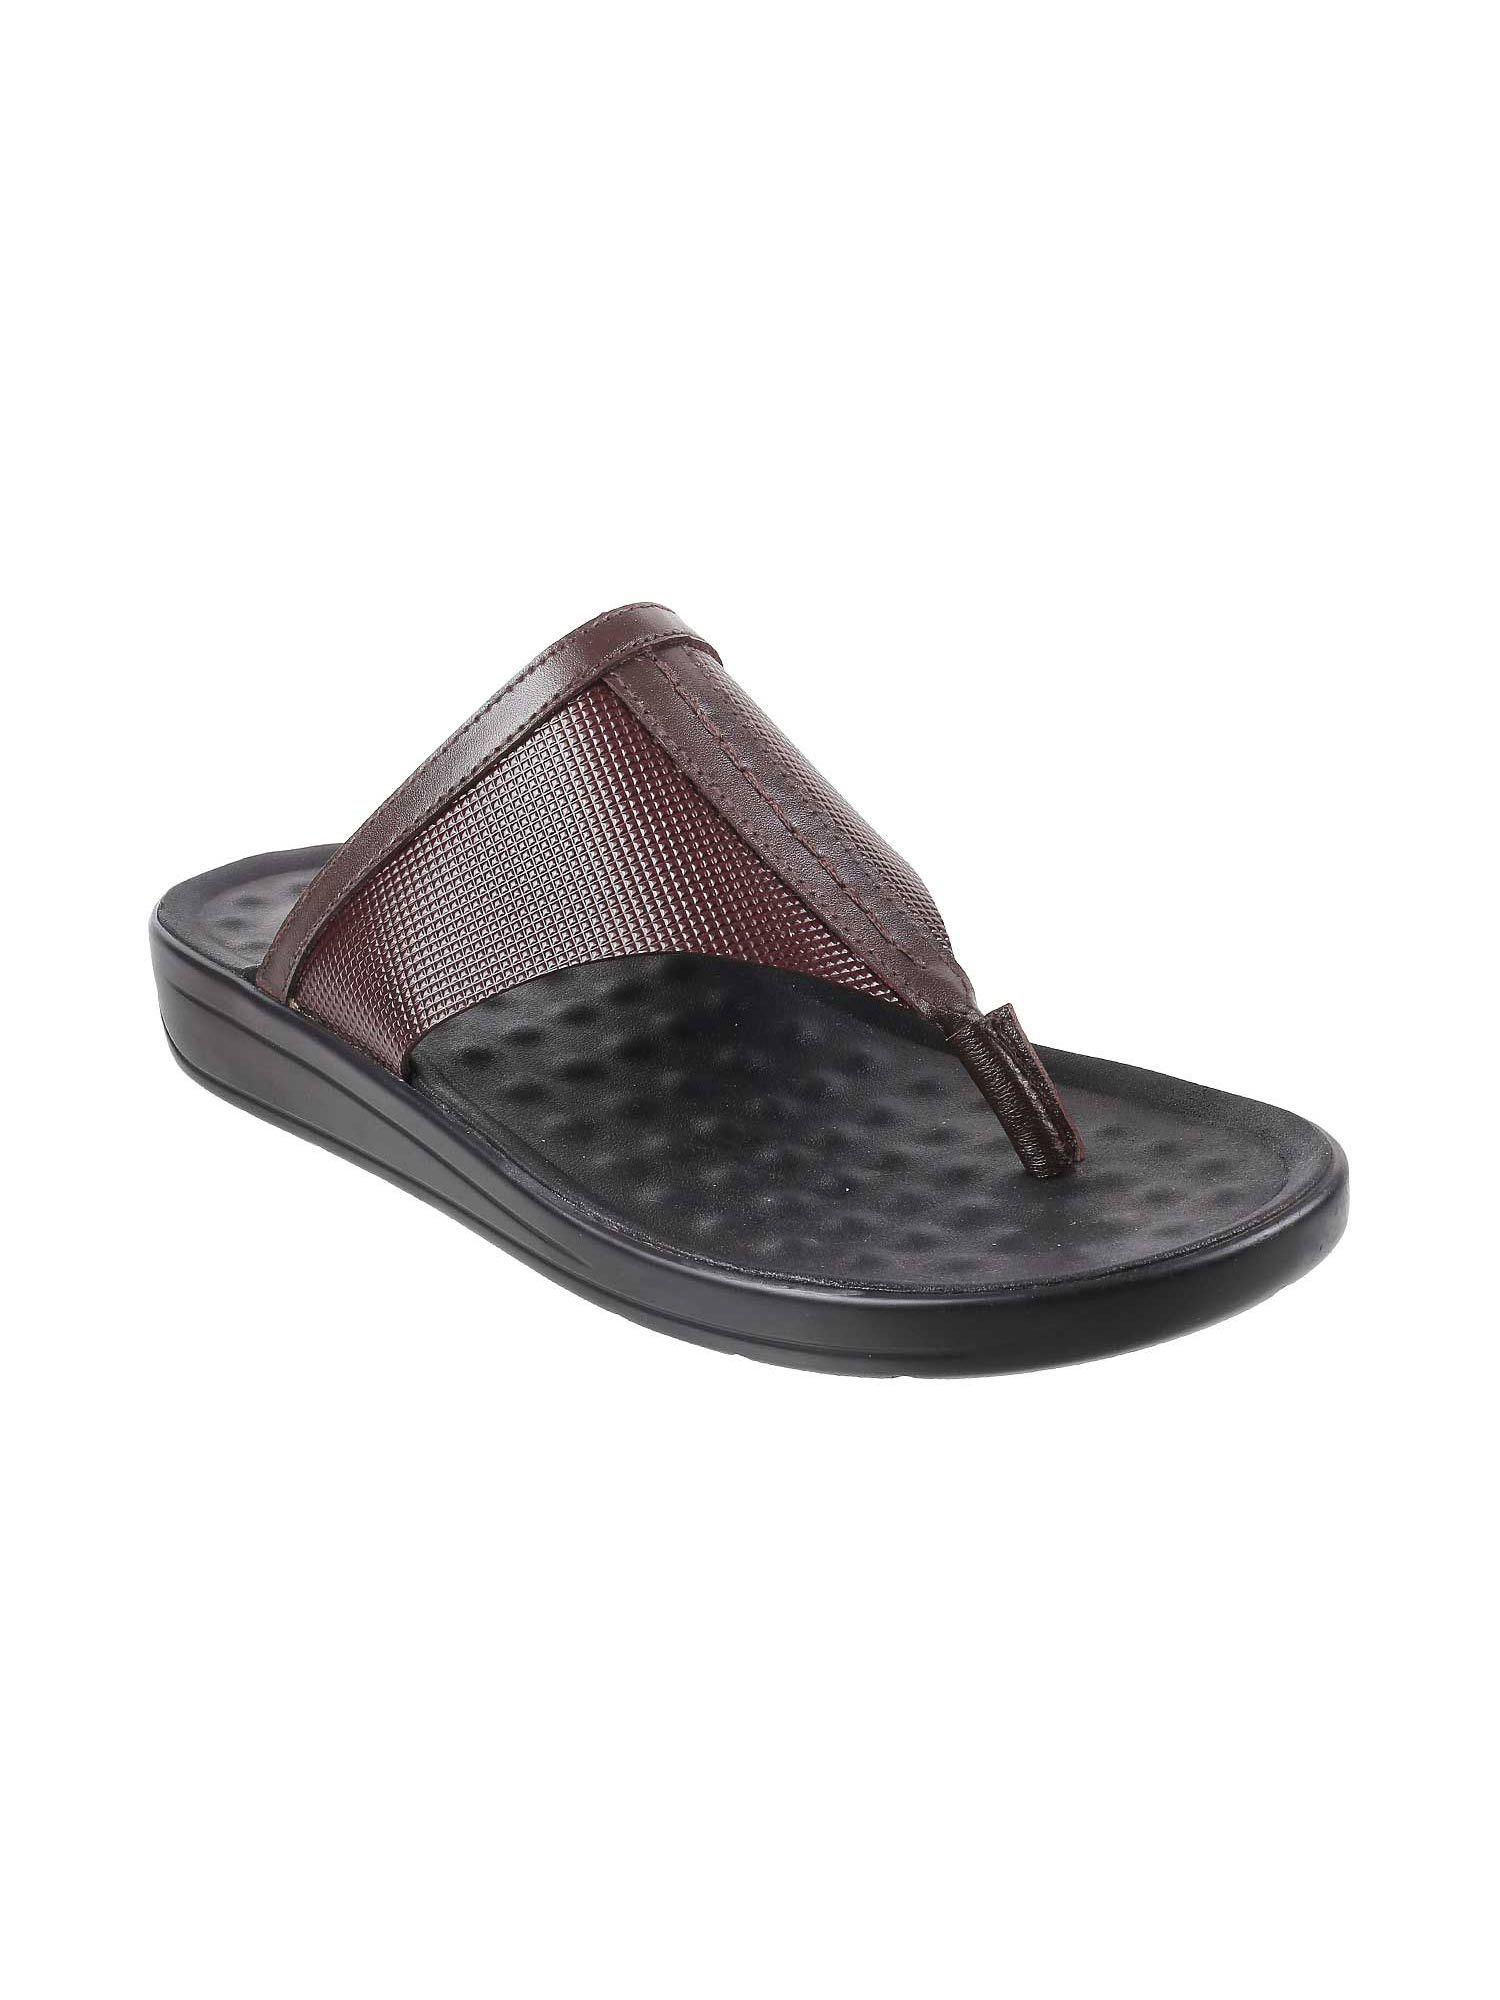 mens brown flat chappalsmetro brown solid sandals